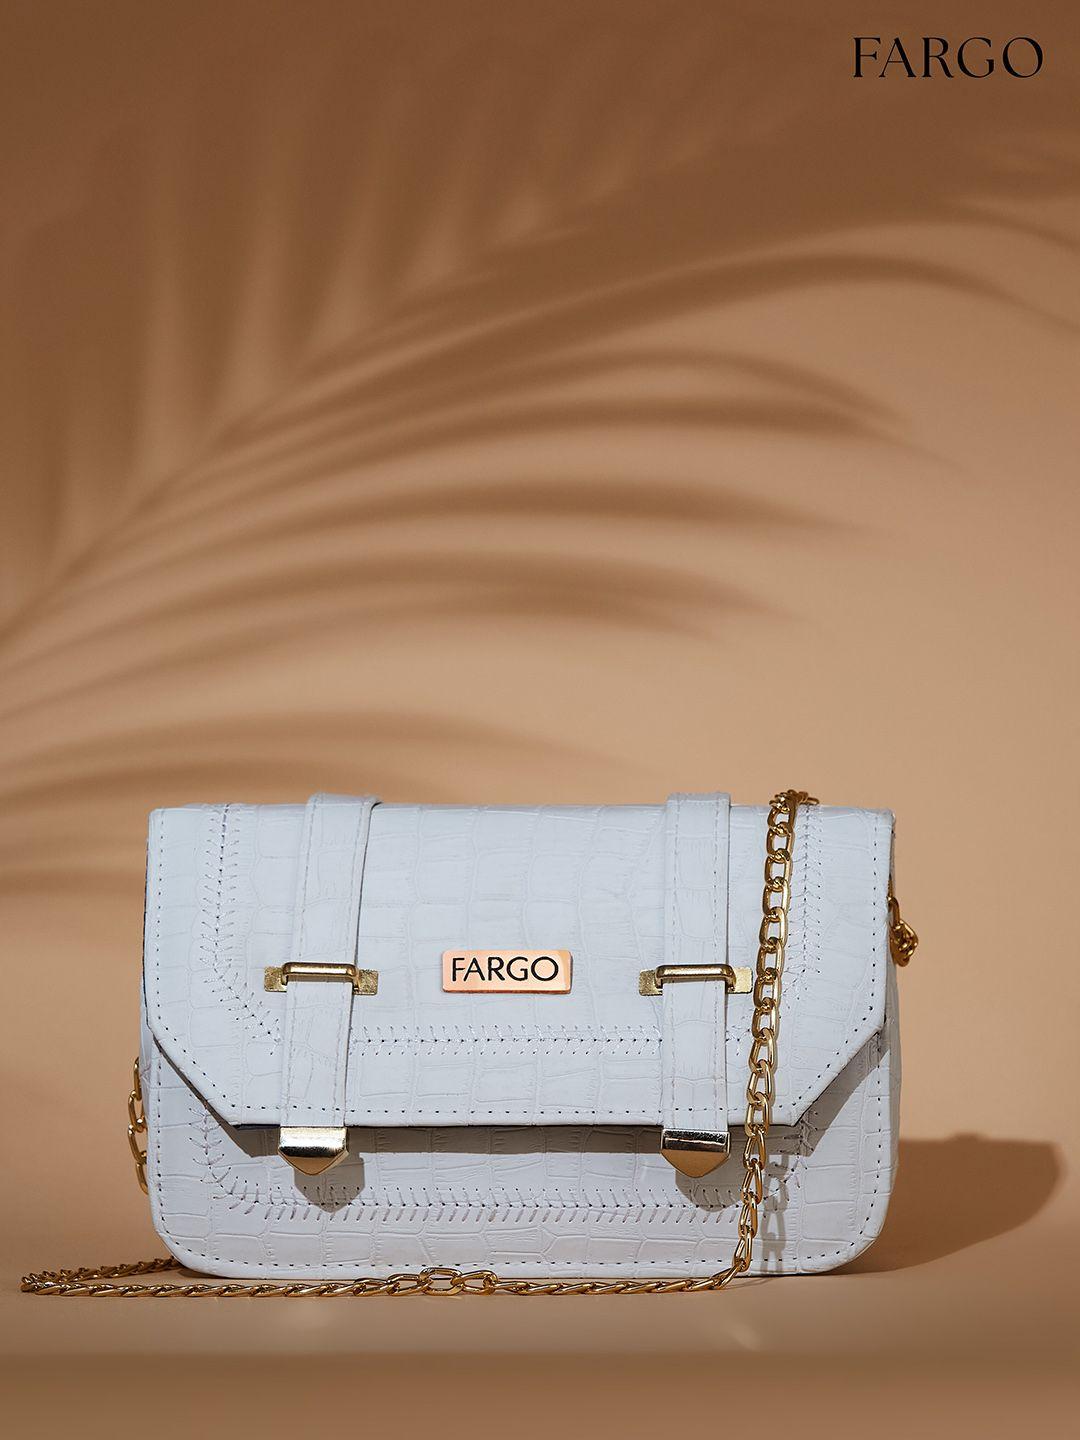 fargo textured structured sling bag